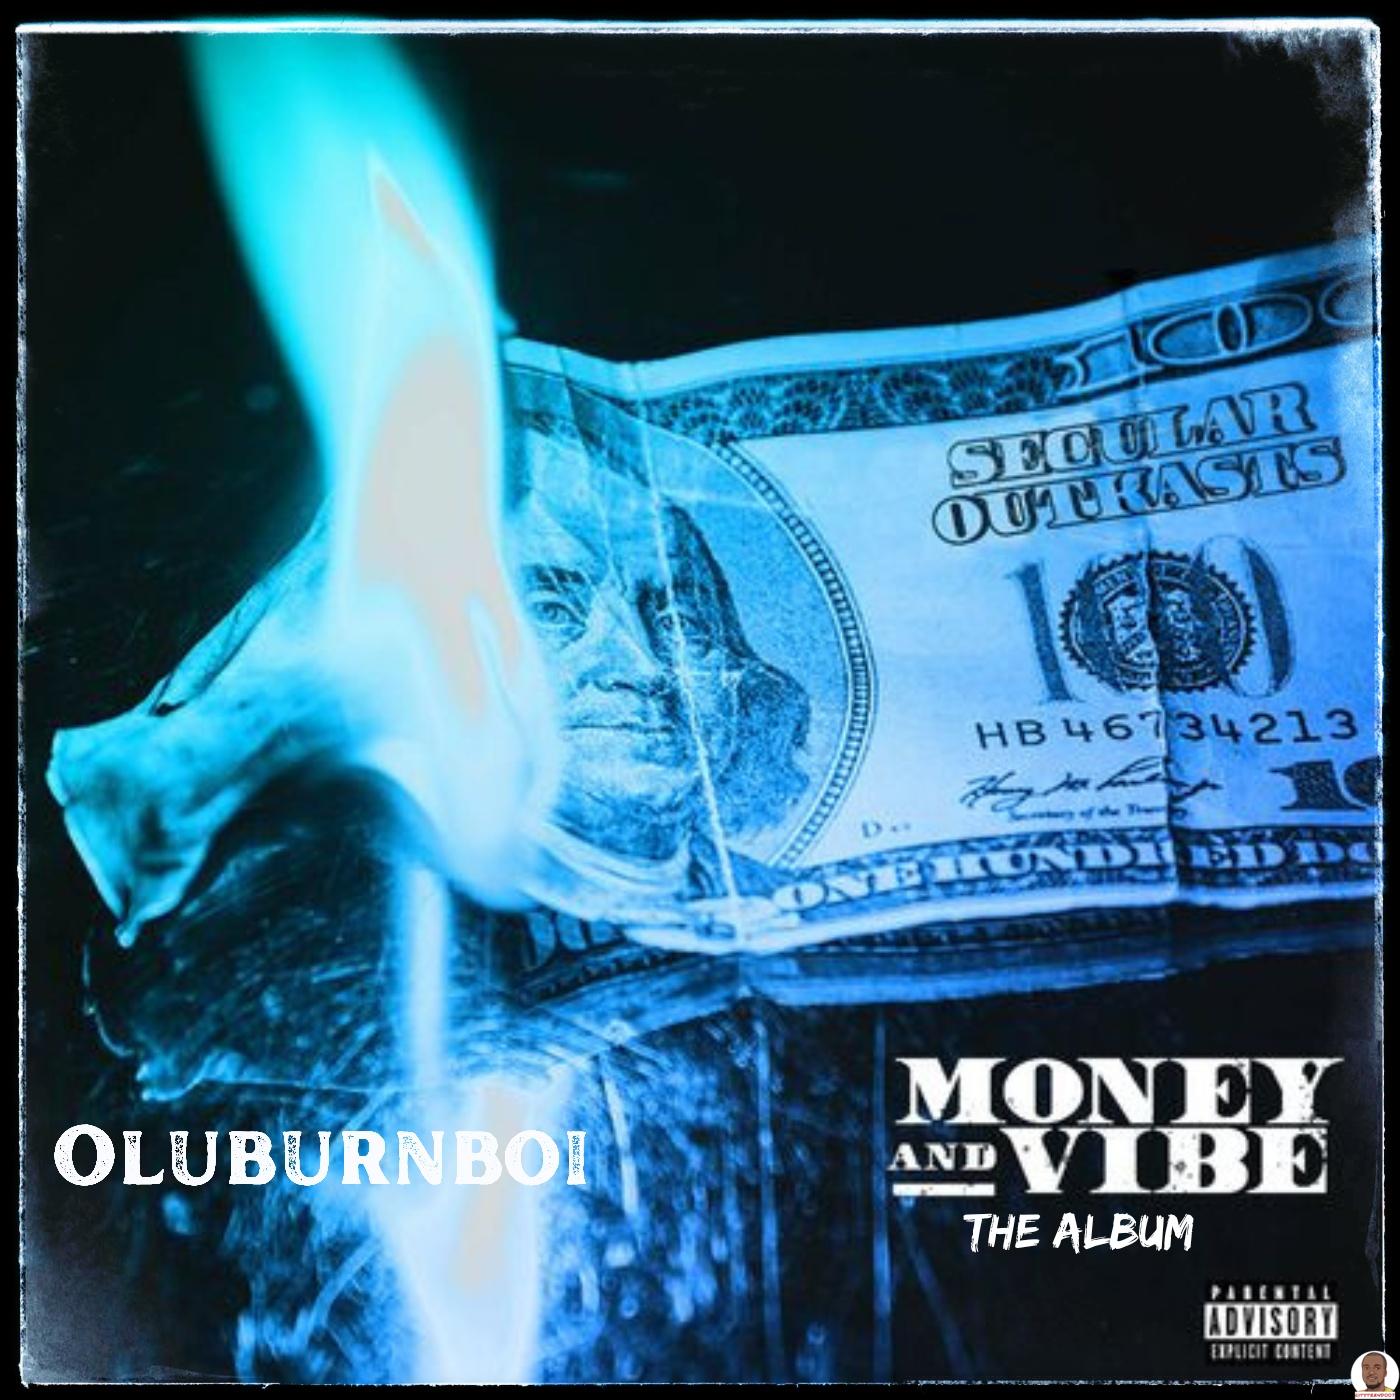 Download Oluburnboi — Money Vibe Album